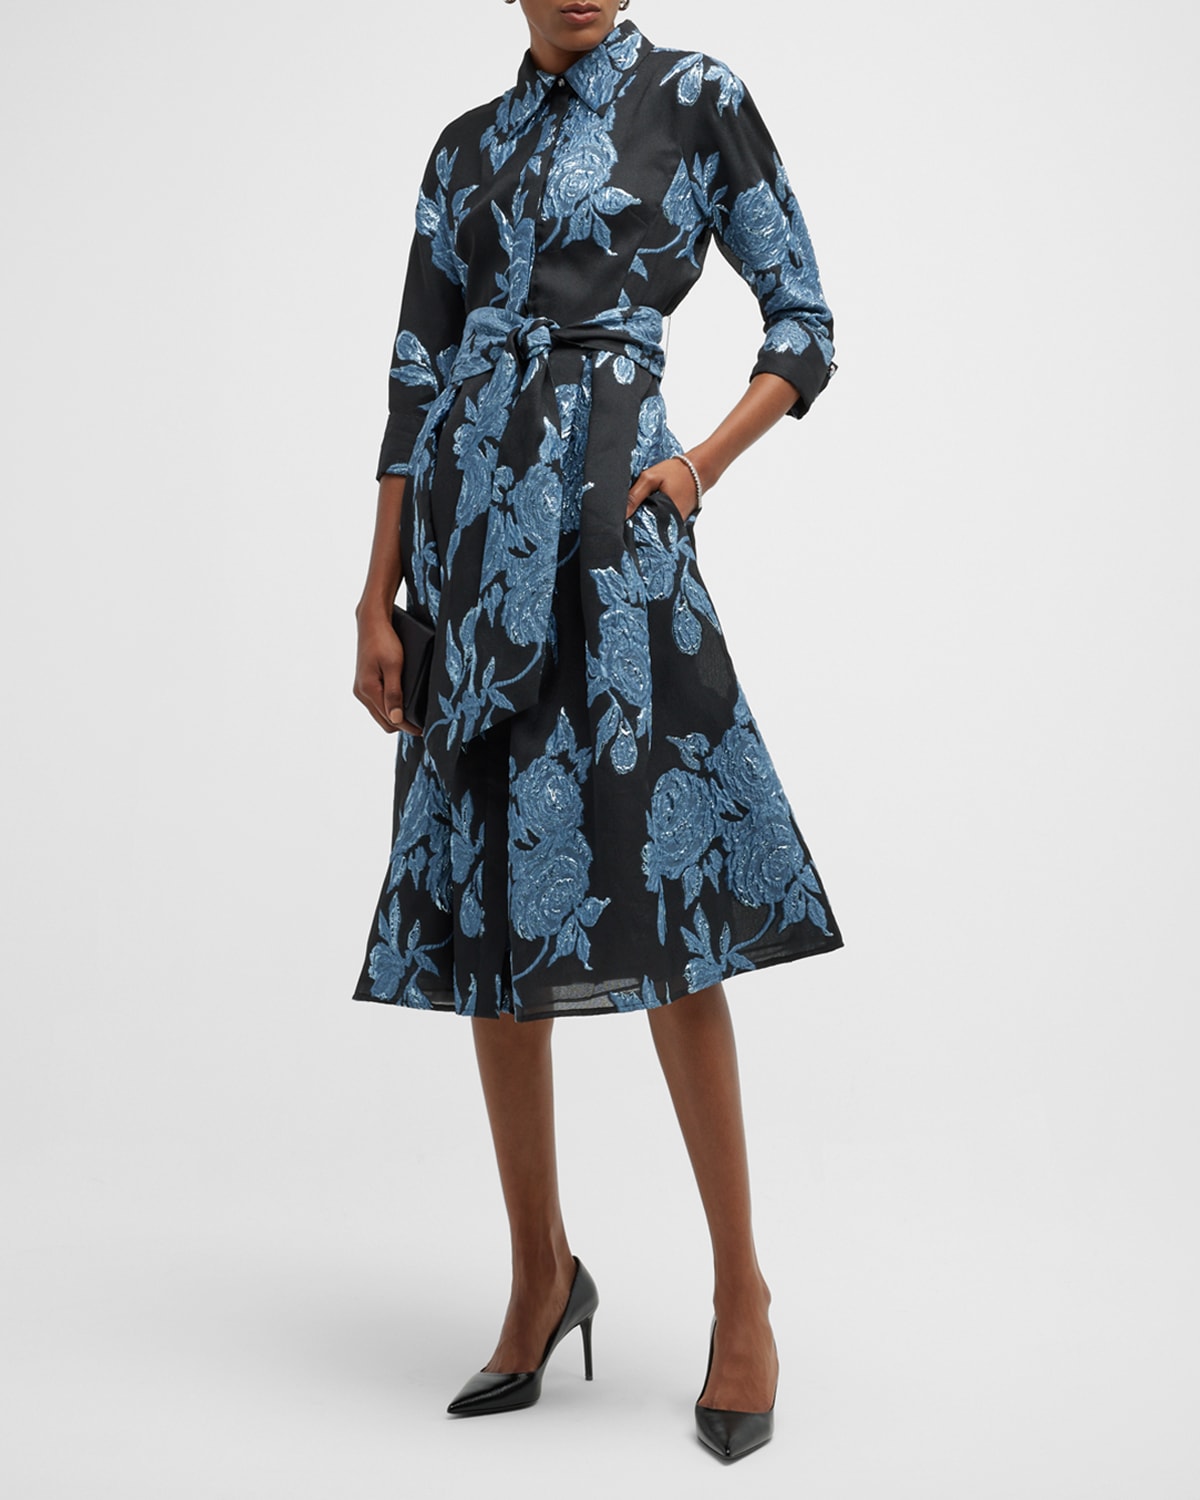 Rickie Freeman for Teri Jon Belted Jacquard Shirtdress Gown | Neiman Marcus